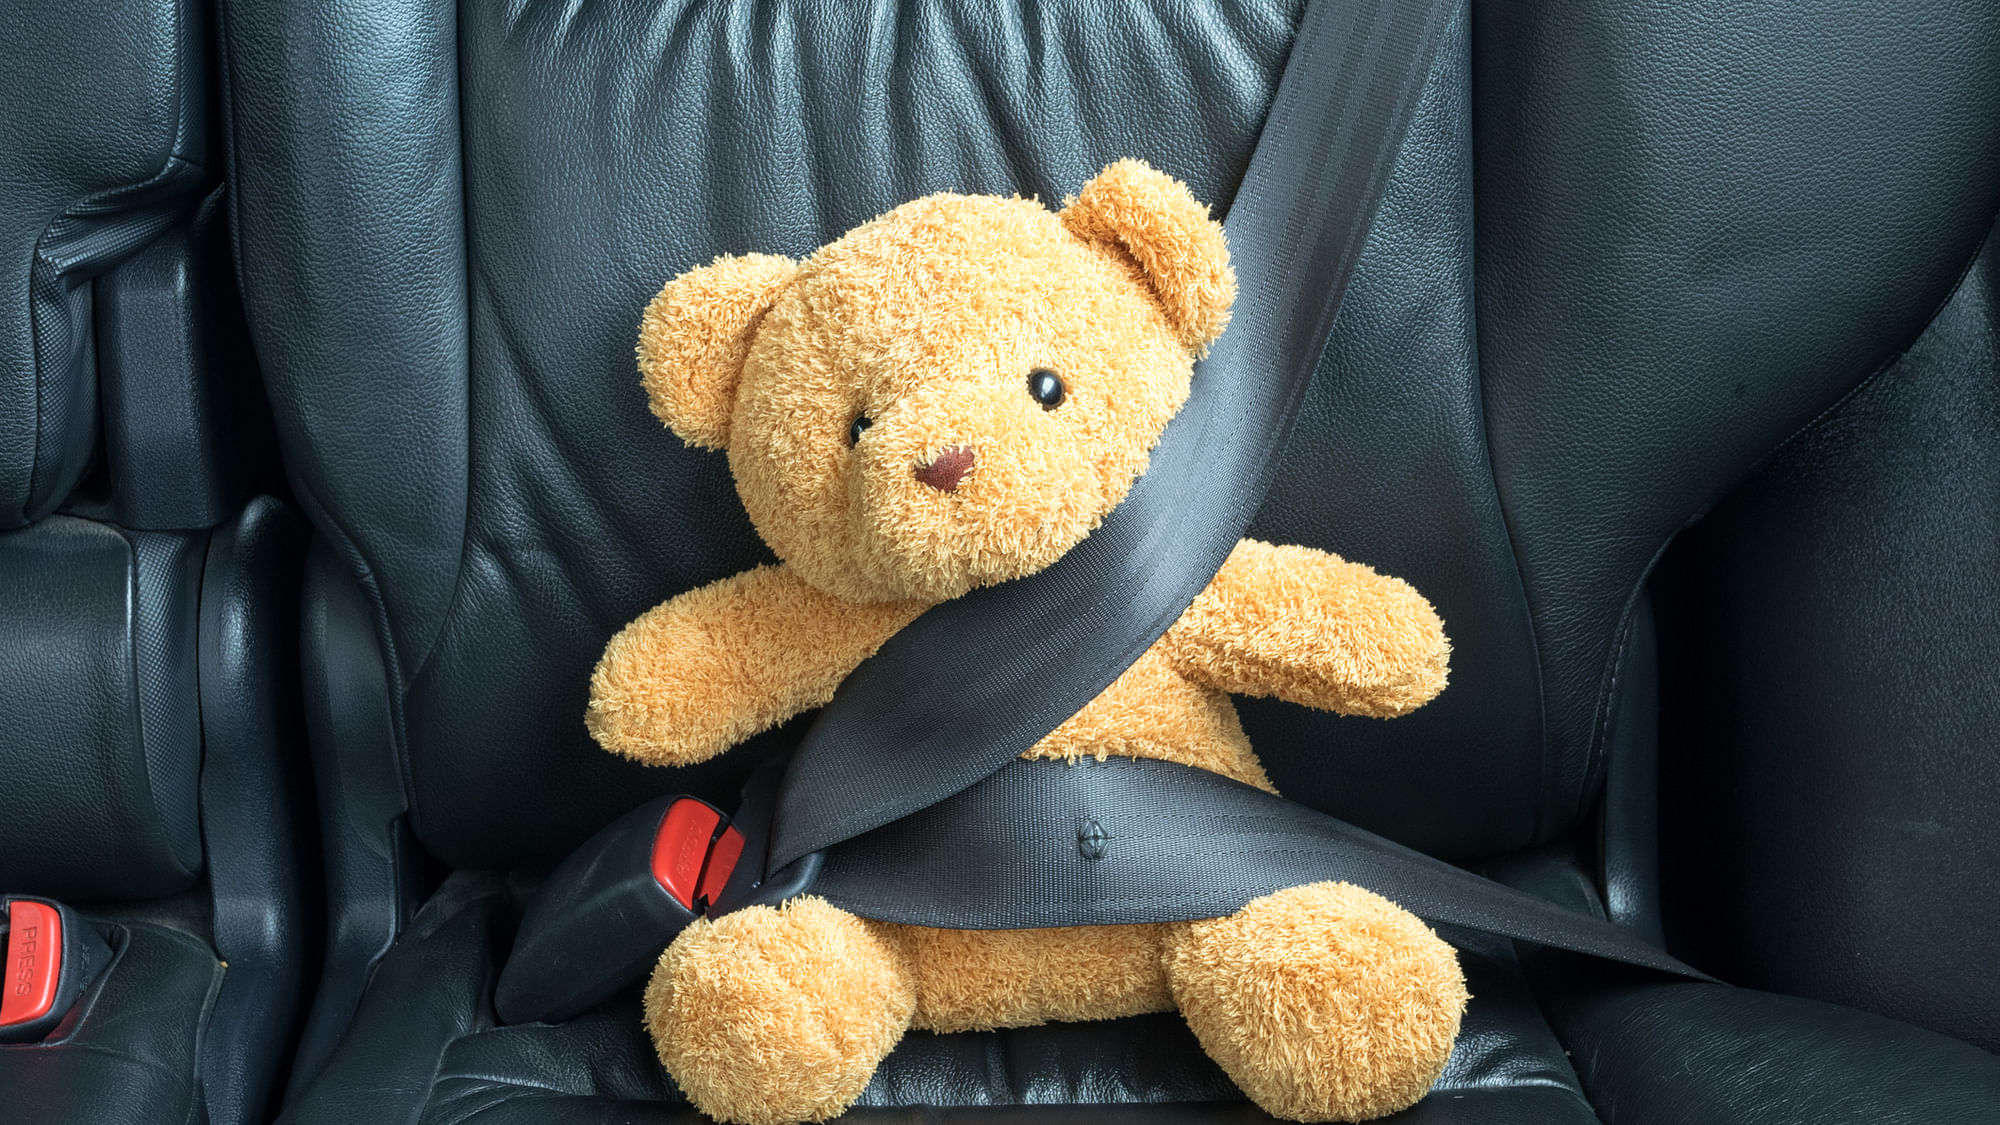 Let’s keep children safe on the road.